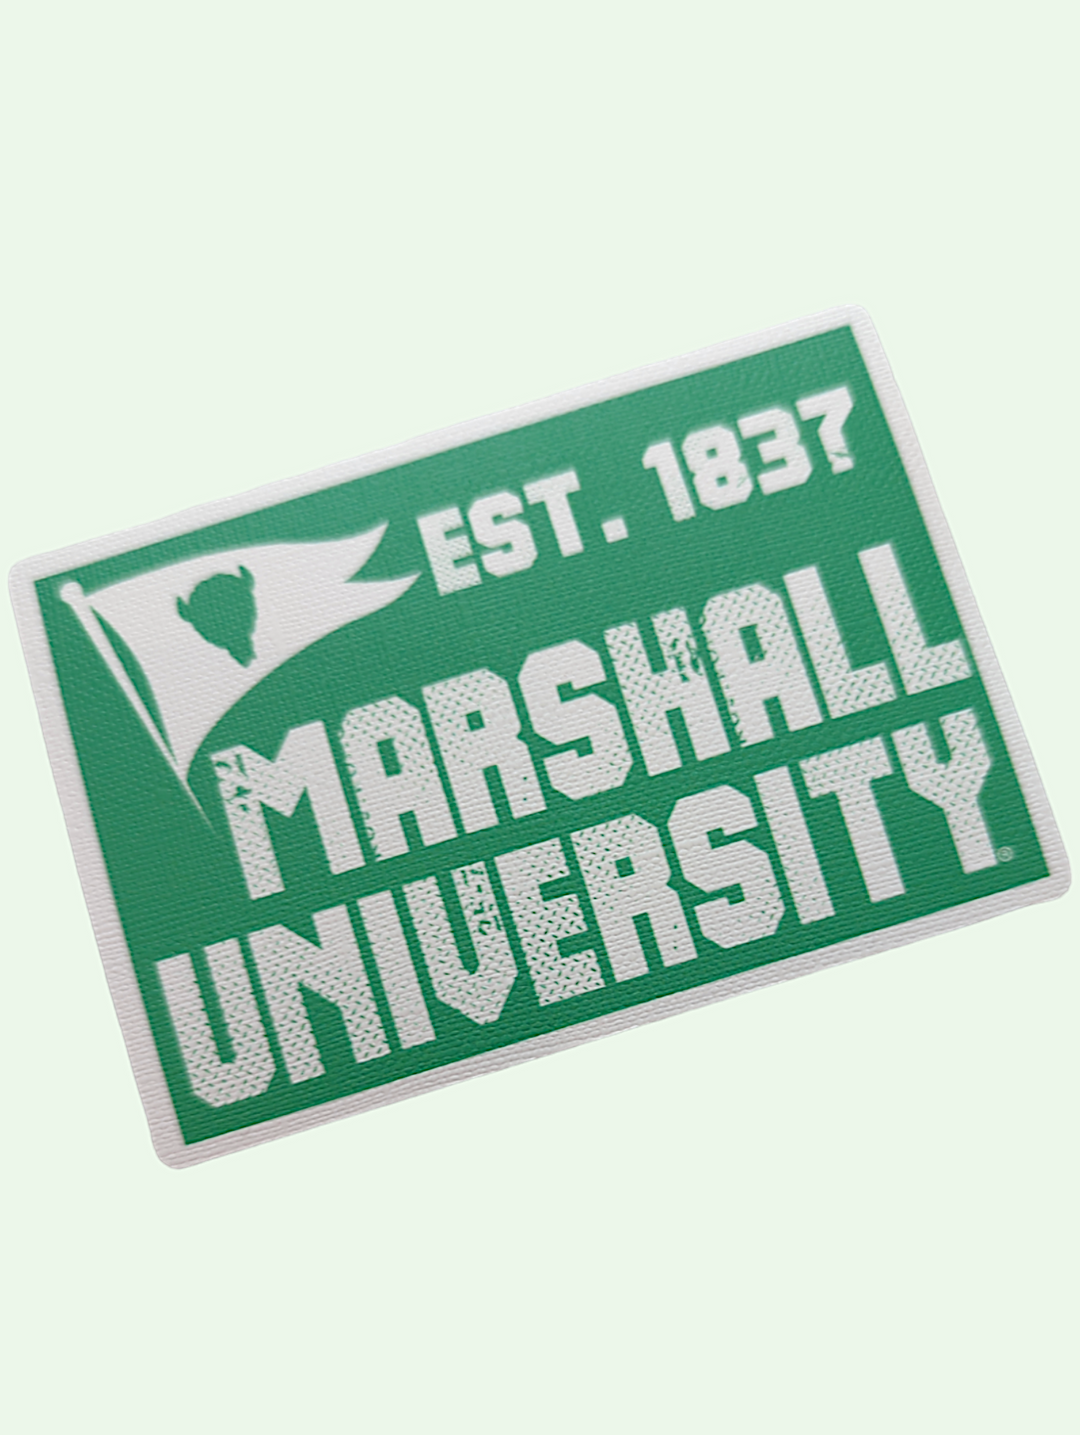 photo of the marshall flag sticker